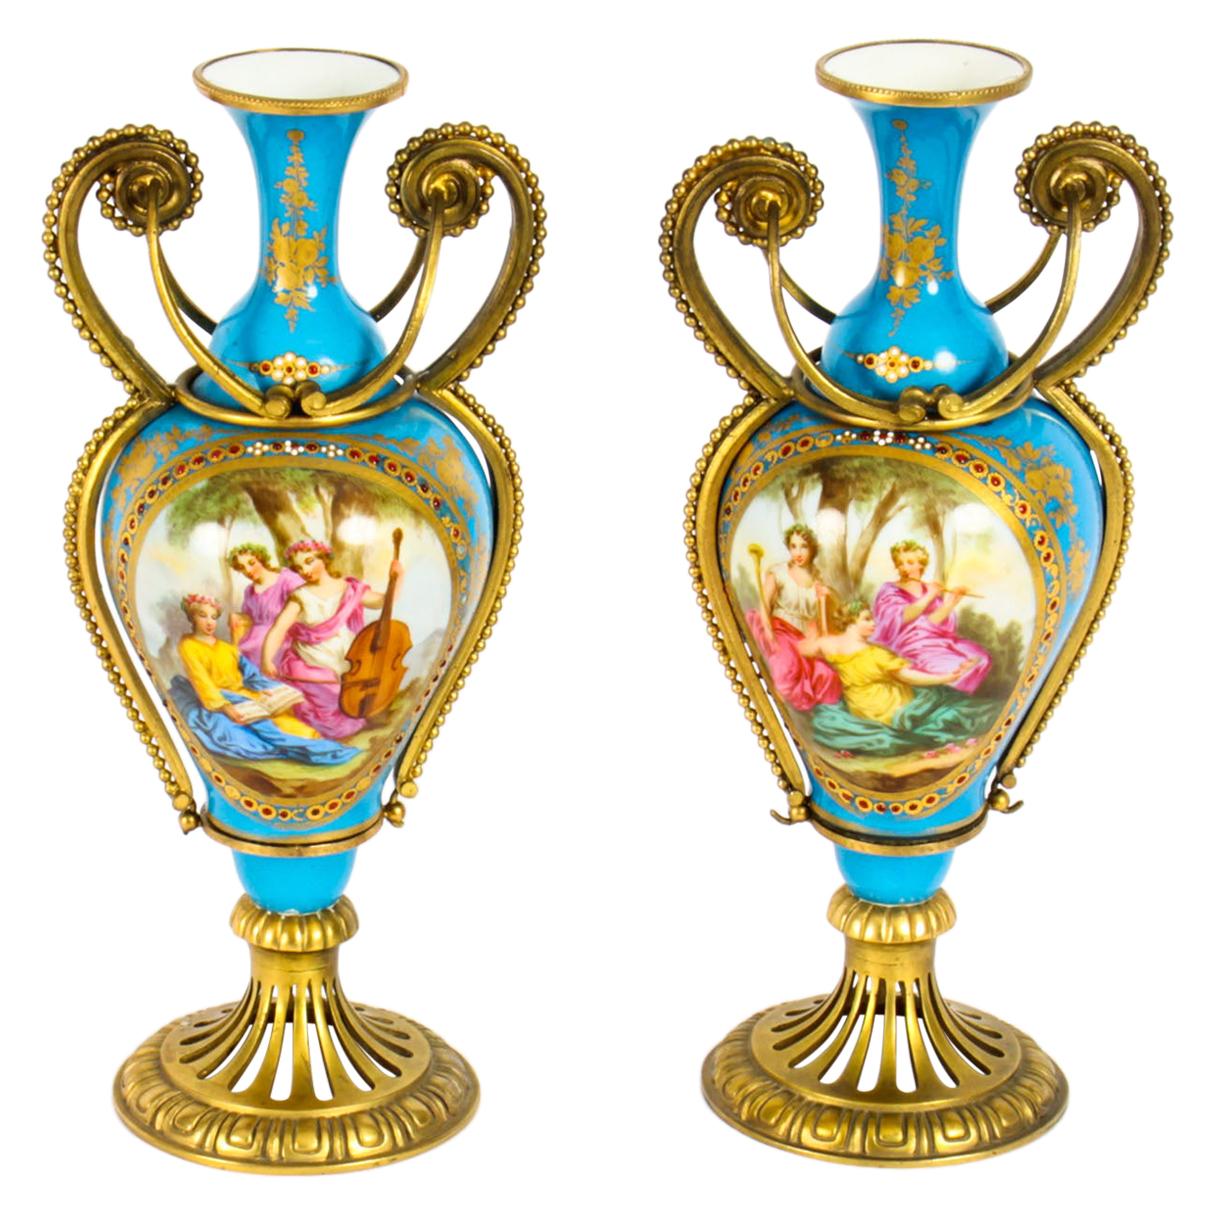 Antique Pair of French Ormolu Mounted Bleu Celeste Sèvres Vases, 19th Century For Sale